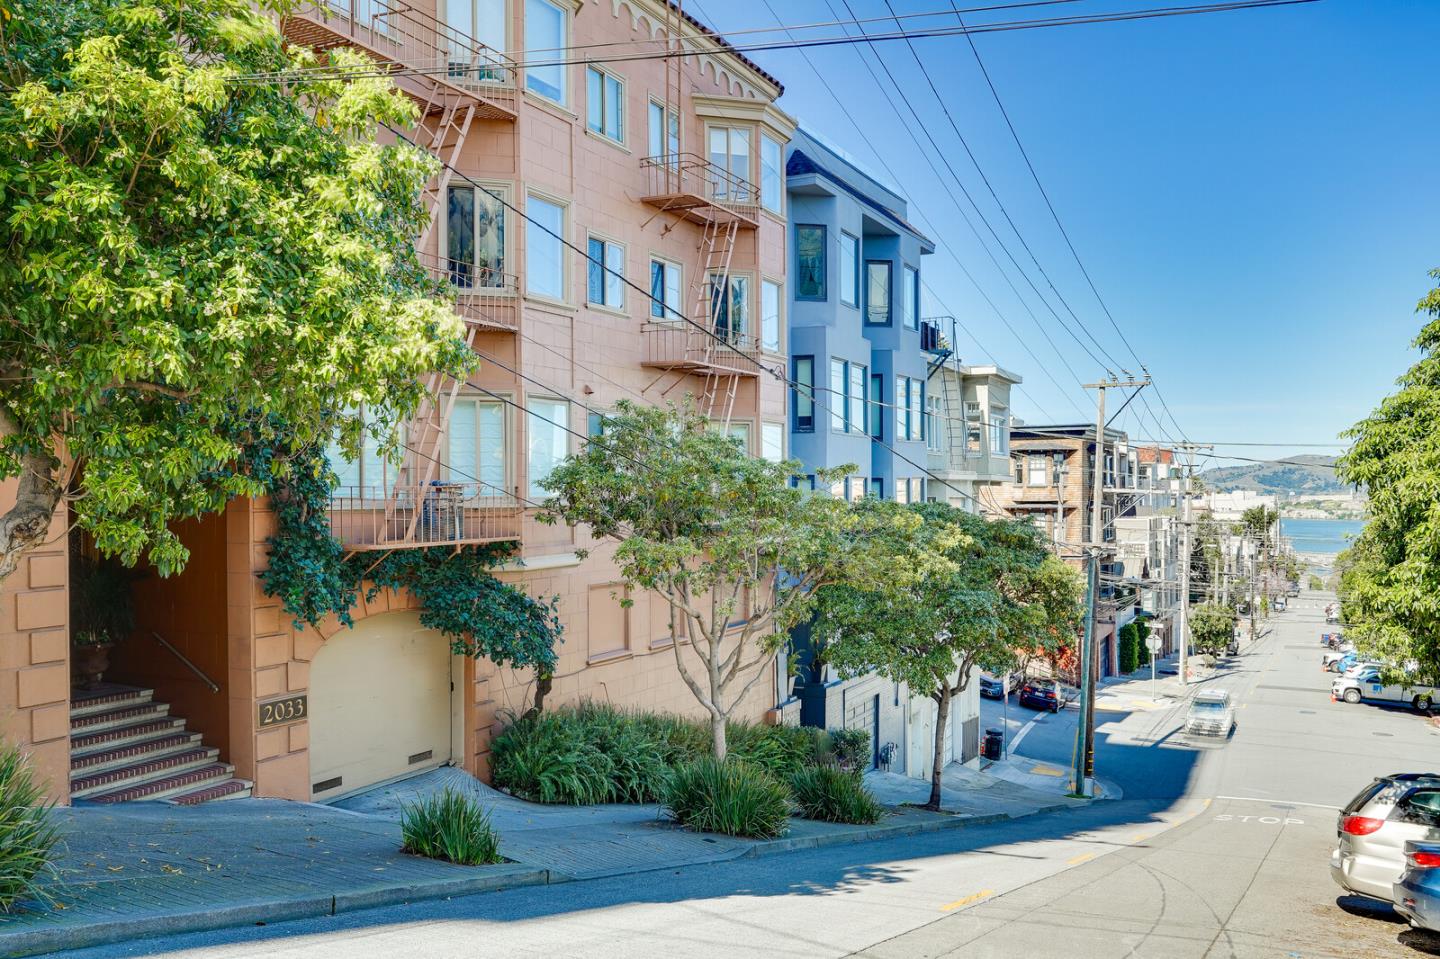 Photo of 2033 Leavenworth St #D in San Francisco, CA